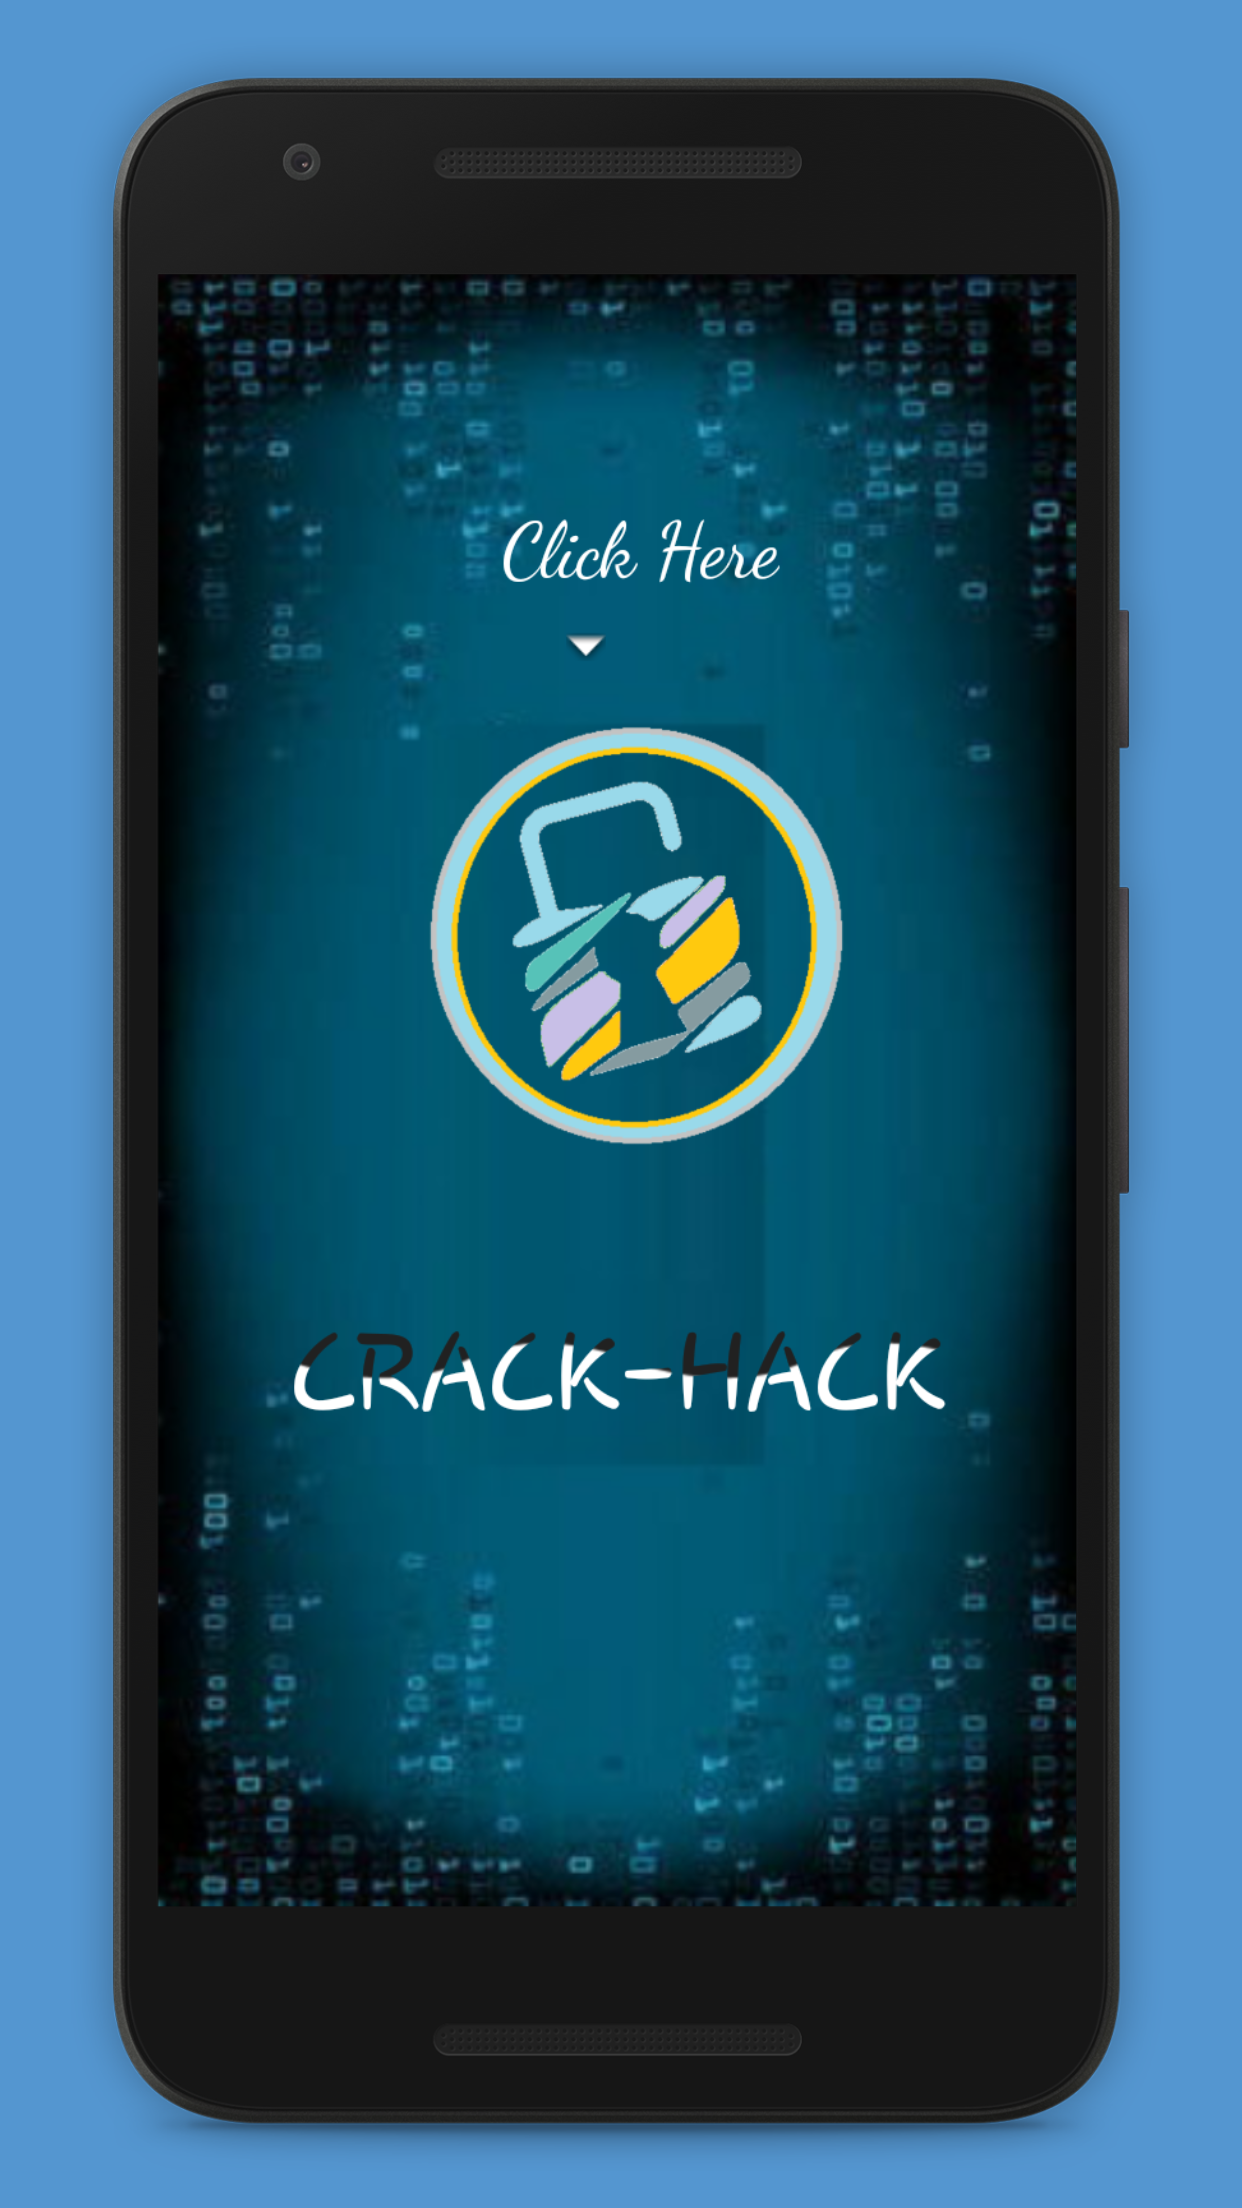 Crack-Hack for Android - APK Download - 